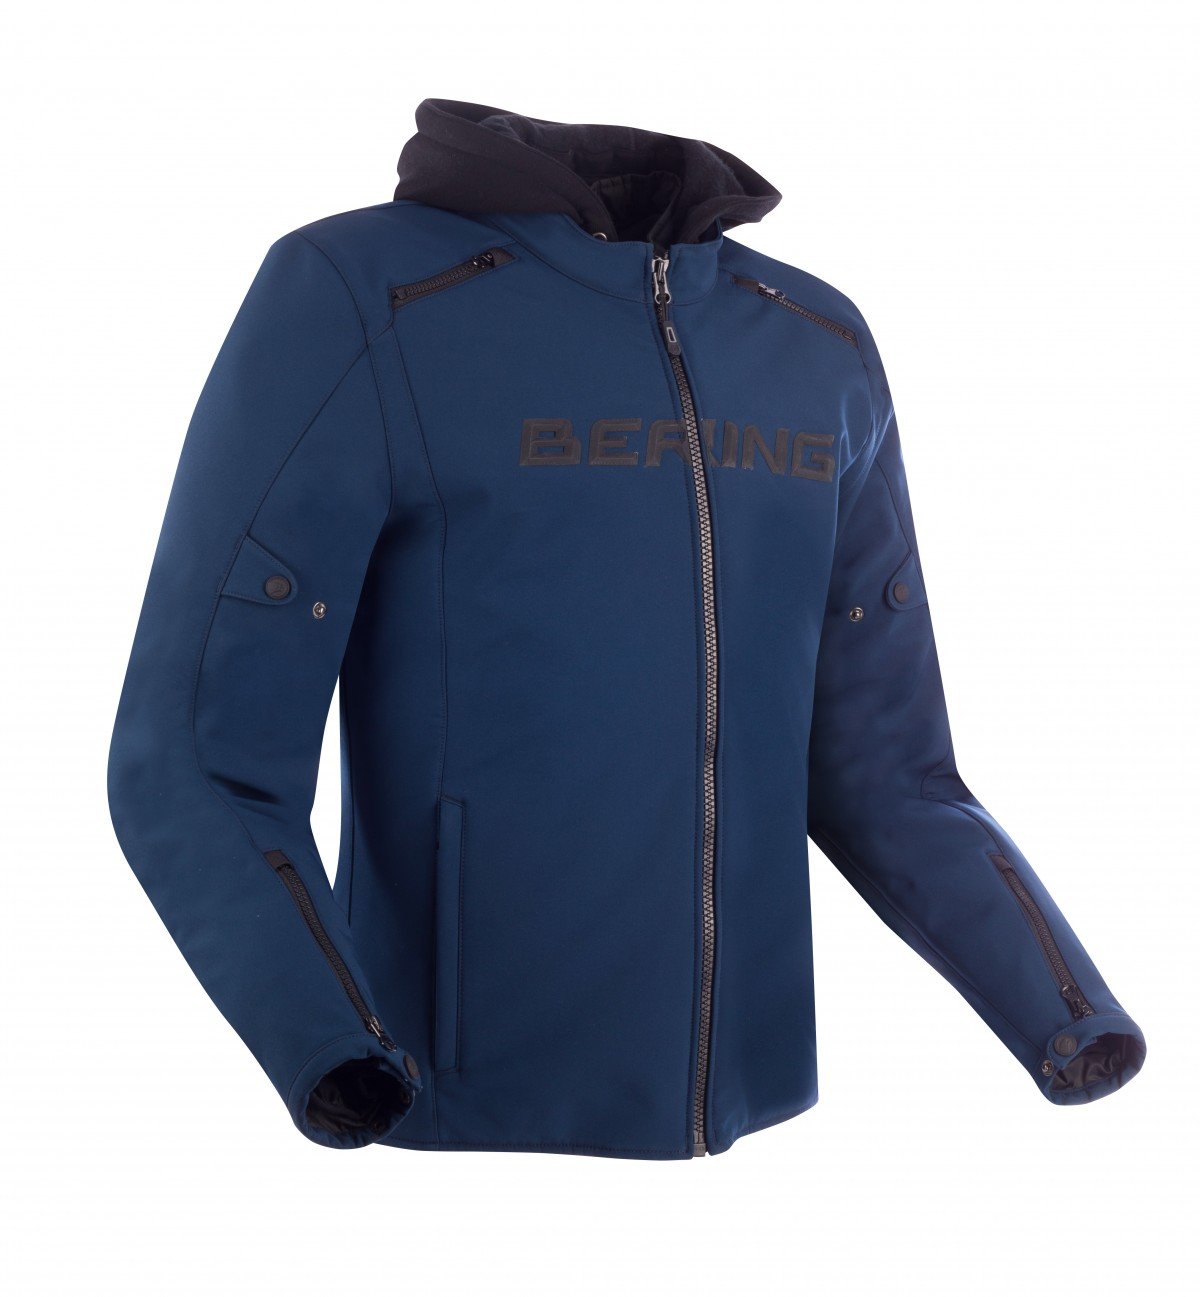 Image of Bering Elite Jacket Navy Blue Size M ID 3660815170243